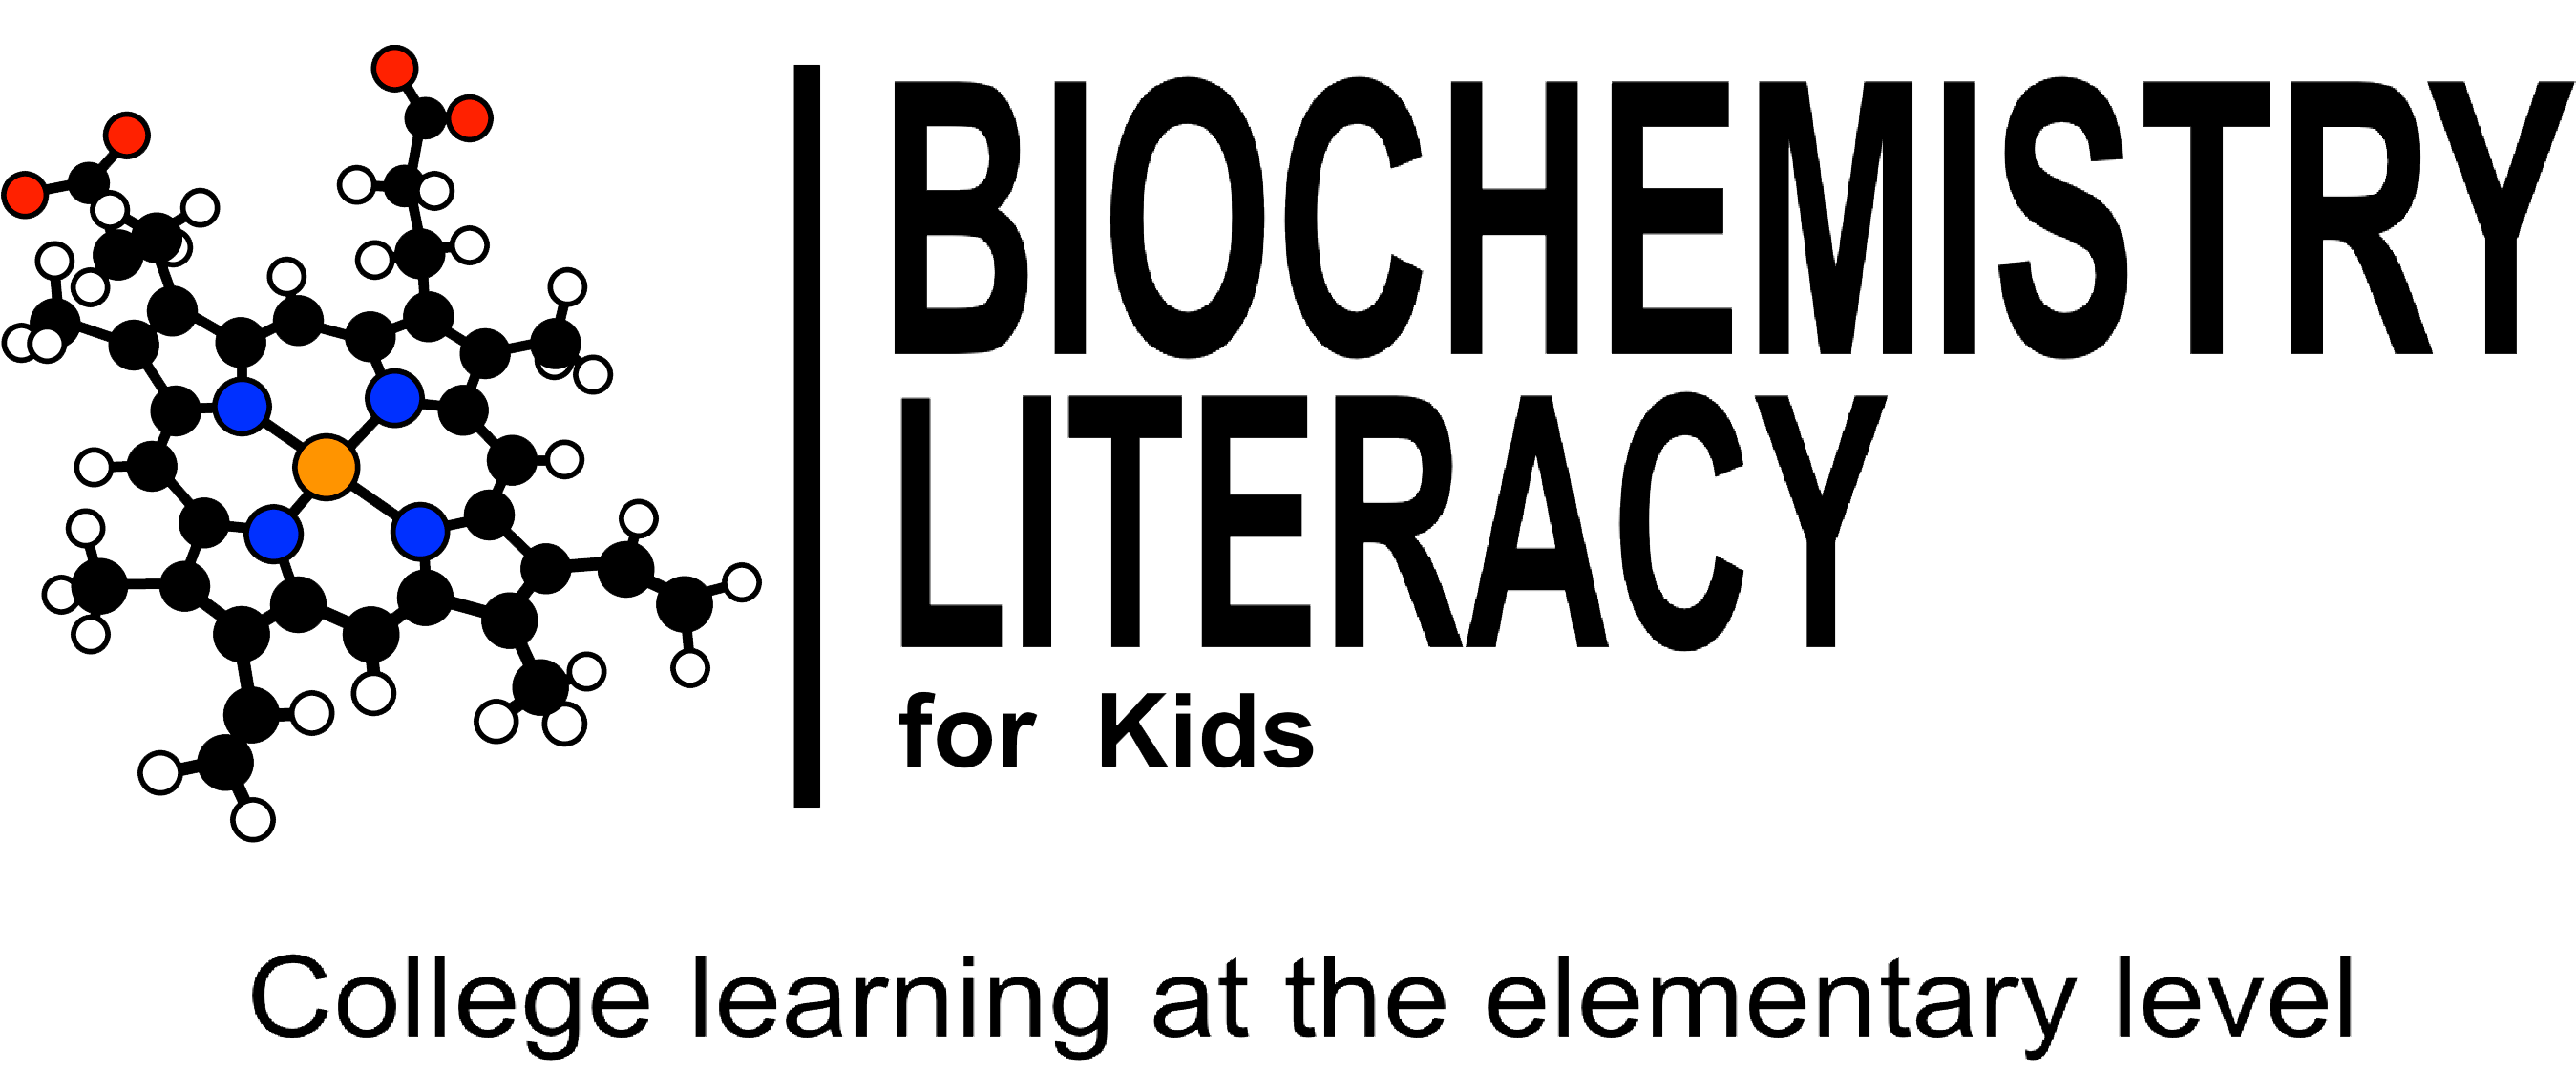 Biochemistry Logo - STEM Curriculum for Teachers and Parents